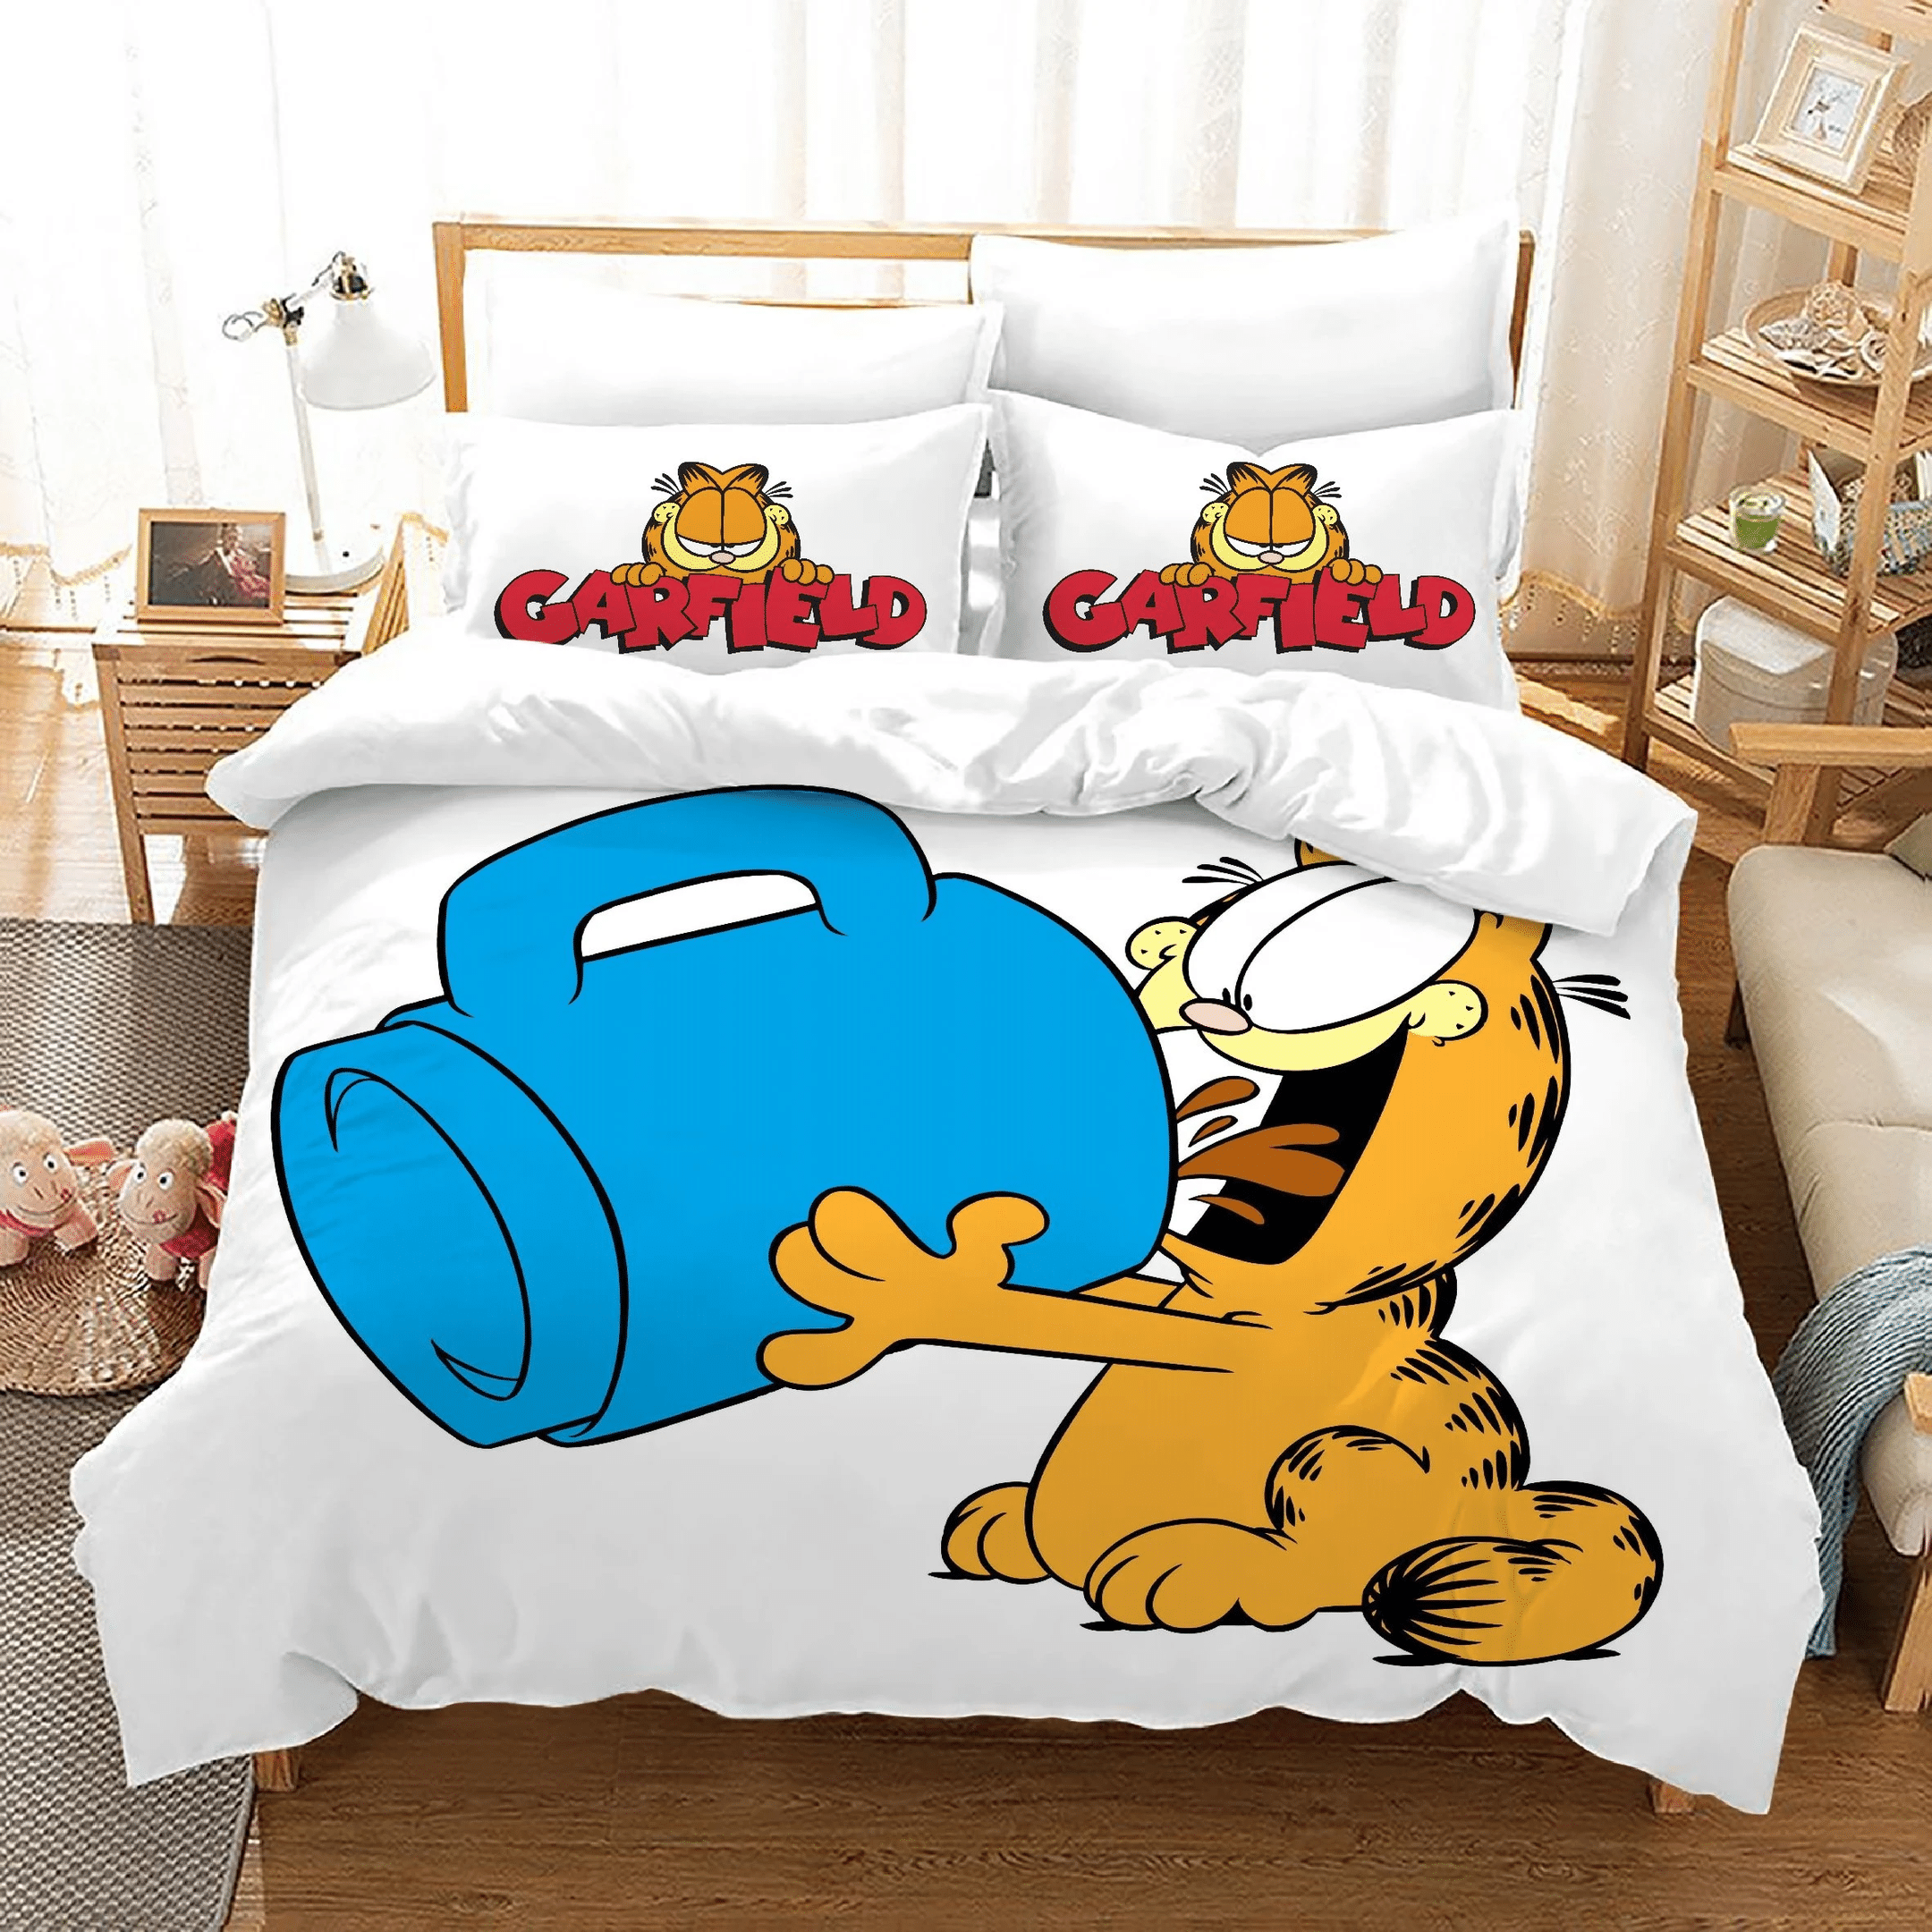 Garfield Exotic Cat 20 Duvet Cover Quilt Cover Pillowcase Bedding